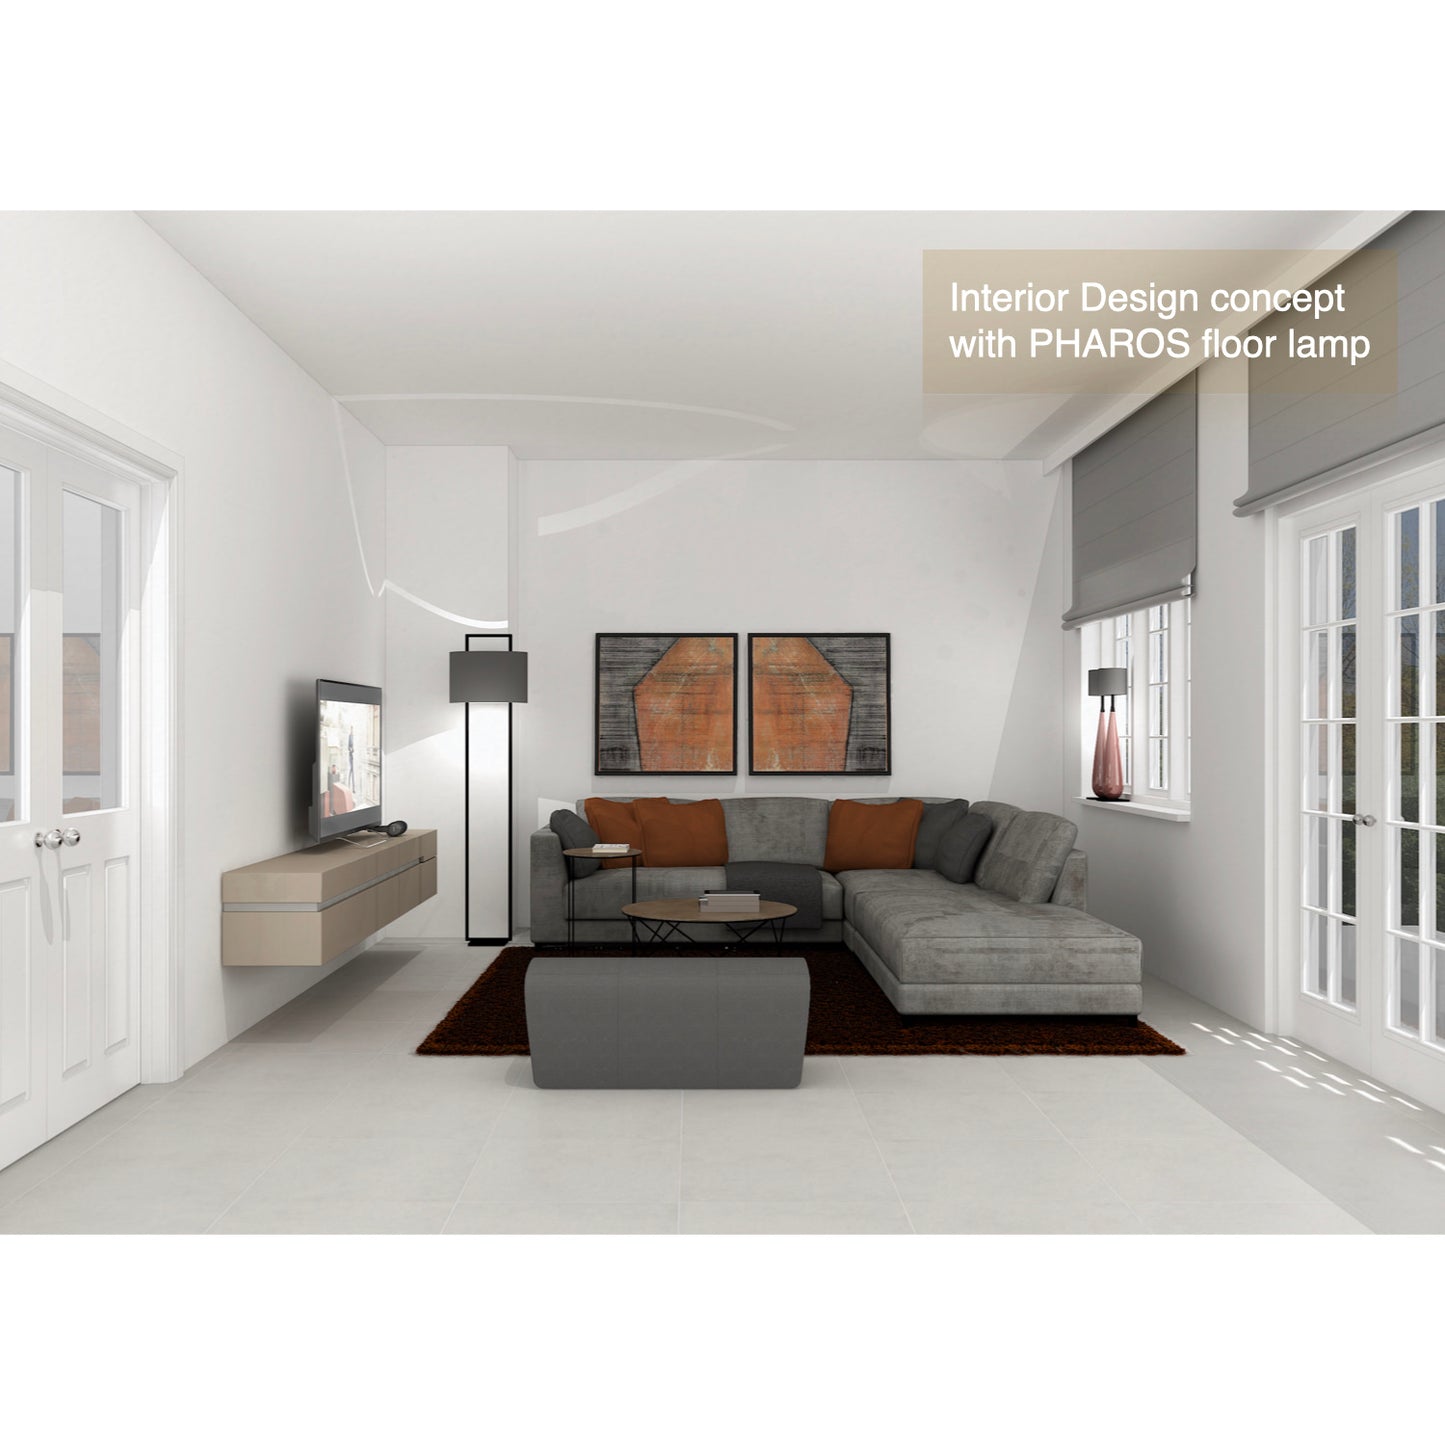 Interior Design concept with PHAROS floor lamp